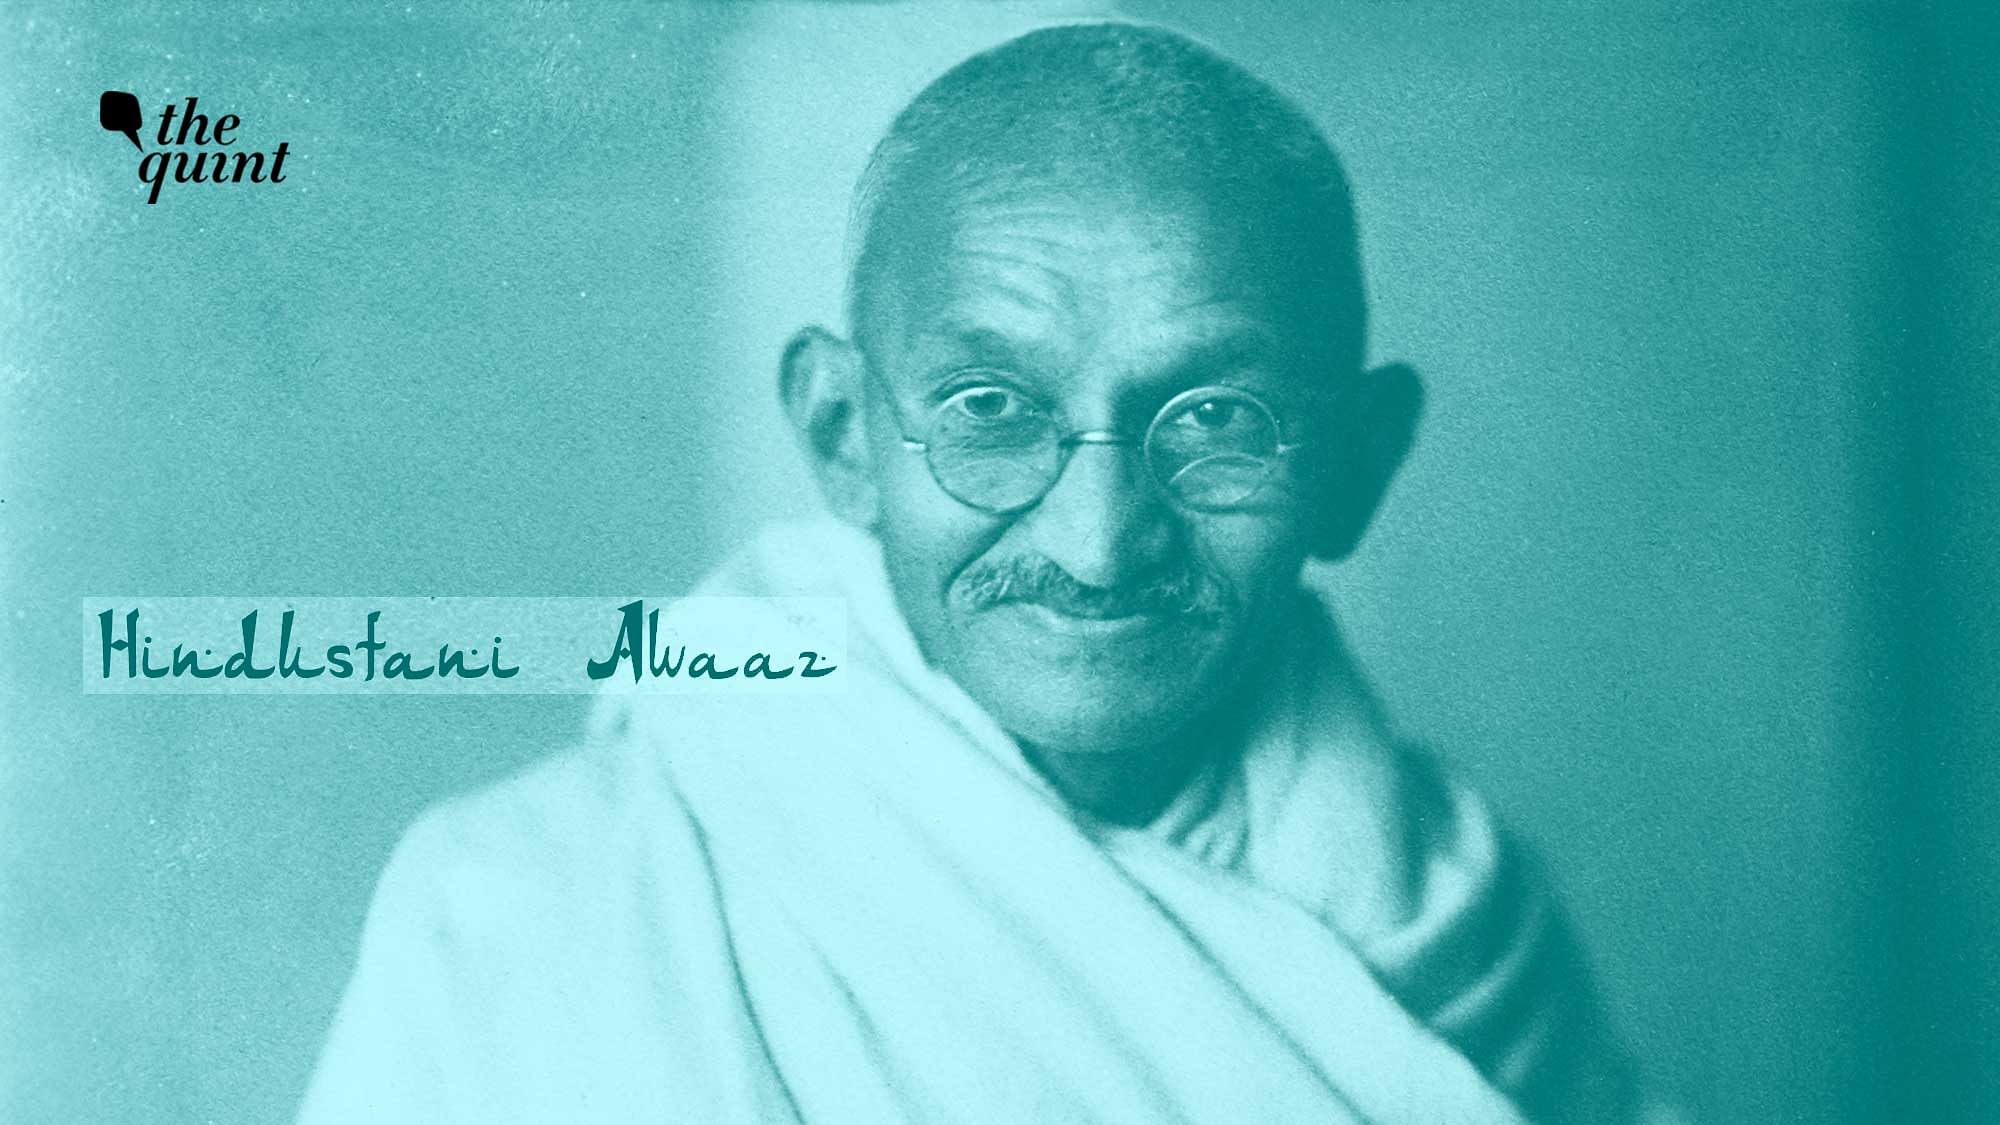 From Gulzar to Wahidi, Here's How Gandhi Is Still Alive in Urdu